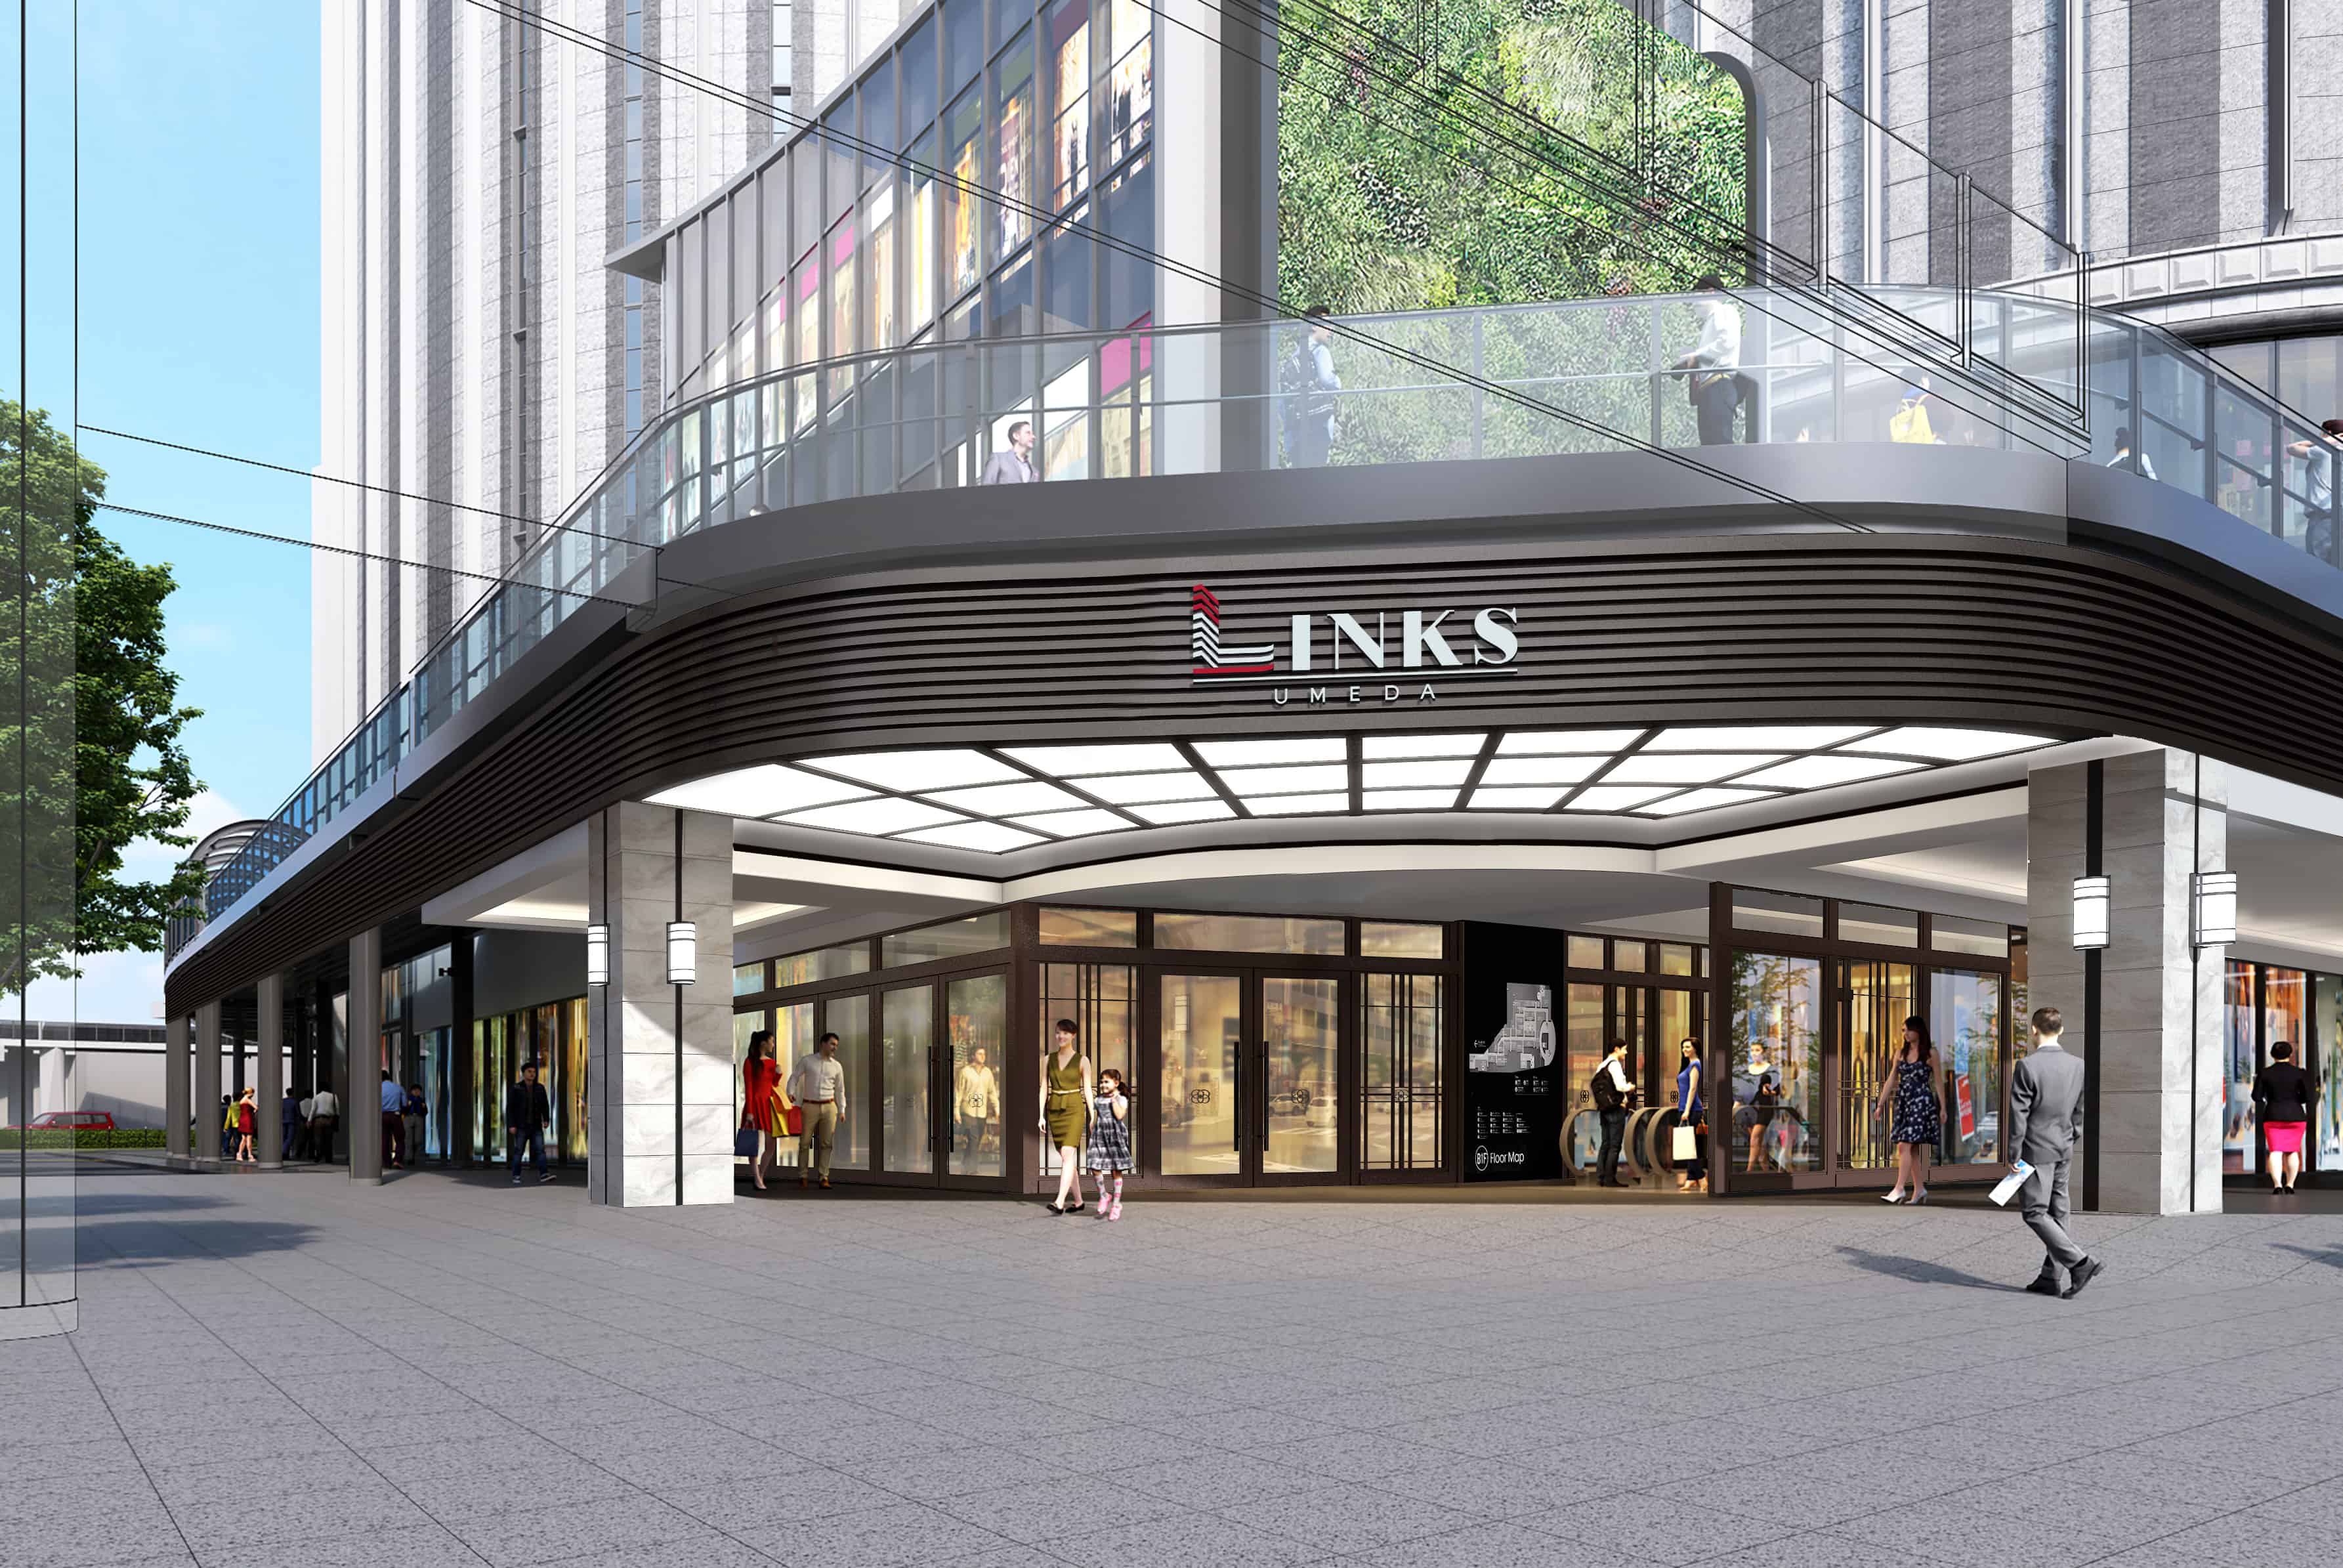 LINK UMEDA ทางเดินเชื่อมสถานที่ด้านนอก 3 สถานที่คือ Grand Front Osaka, Hankyu Umeda station, Shibatacho 